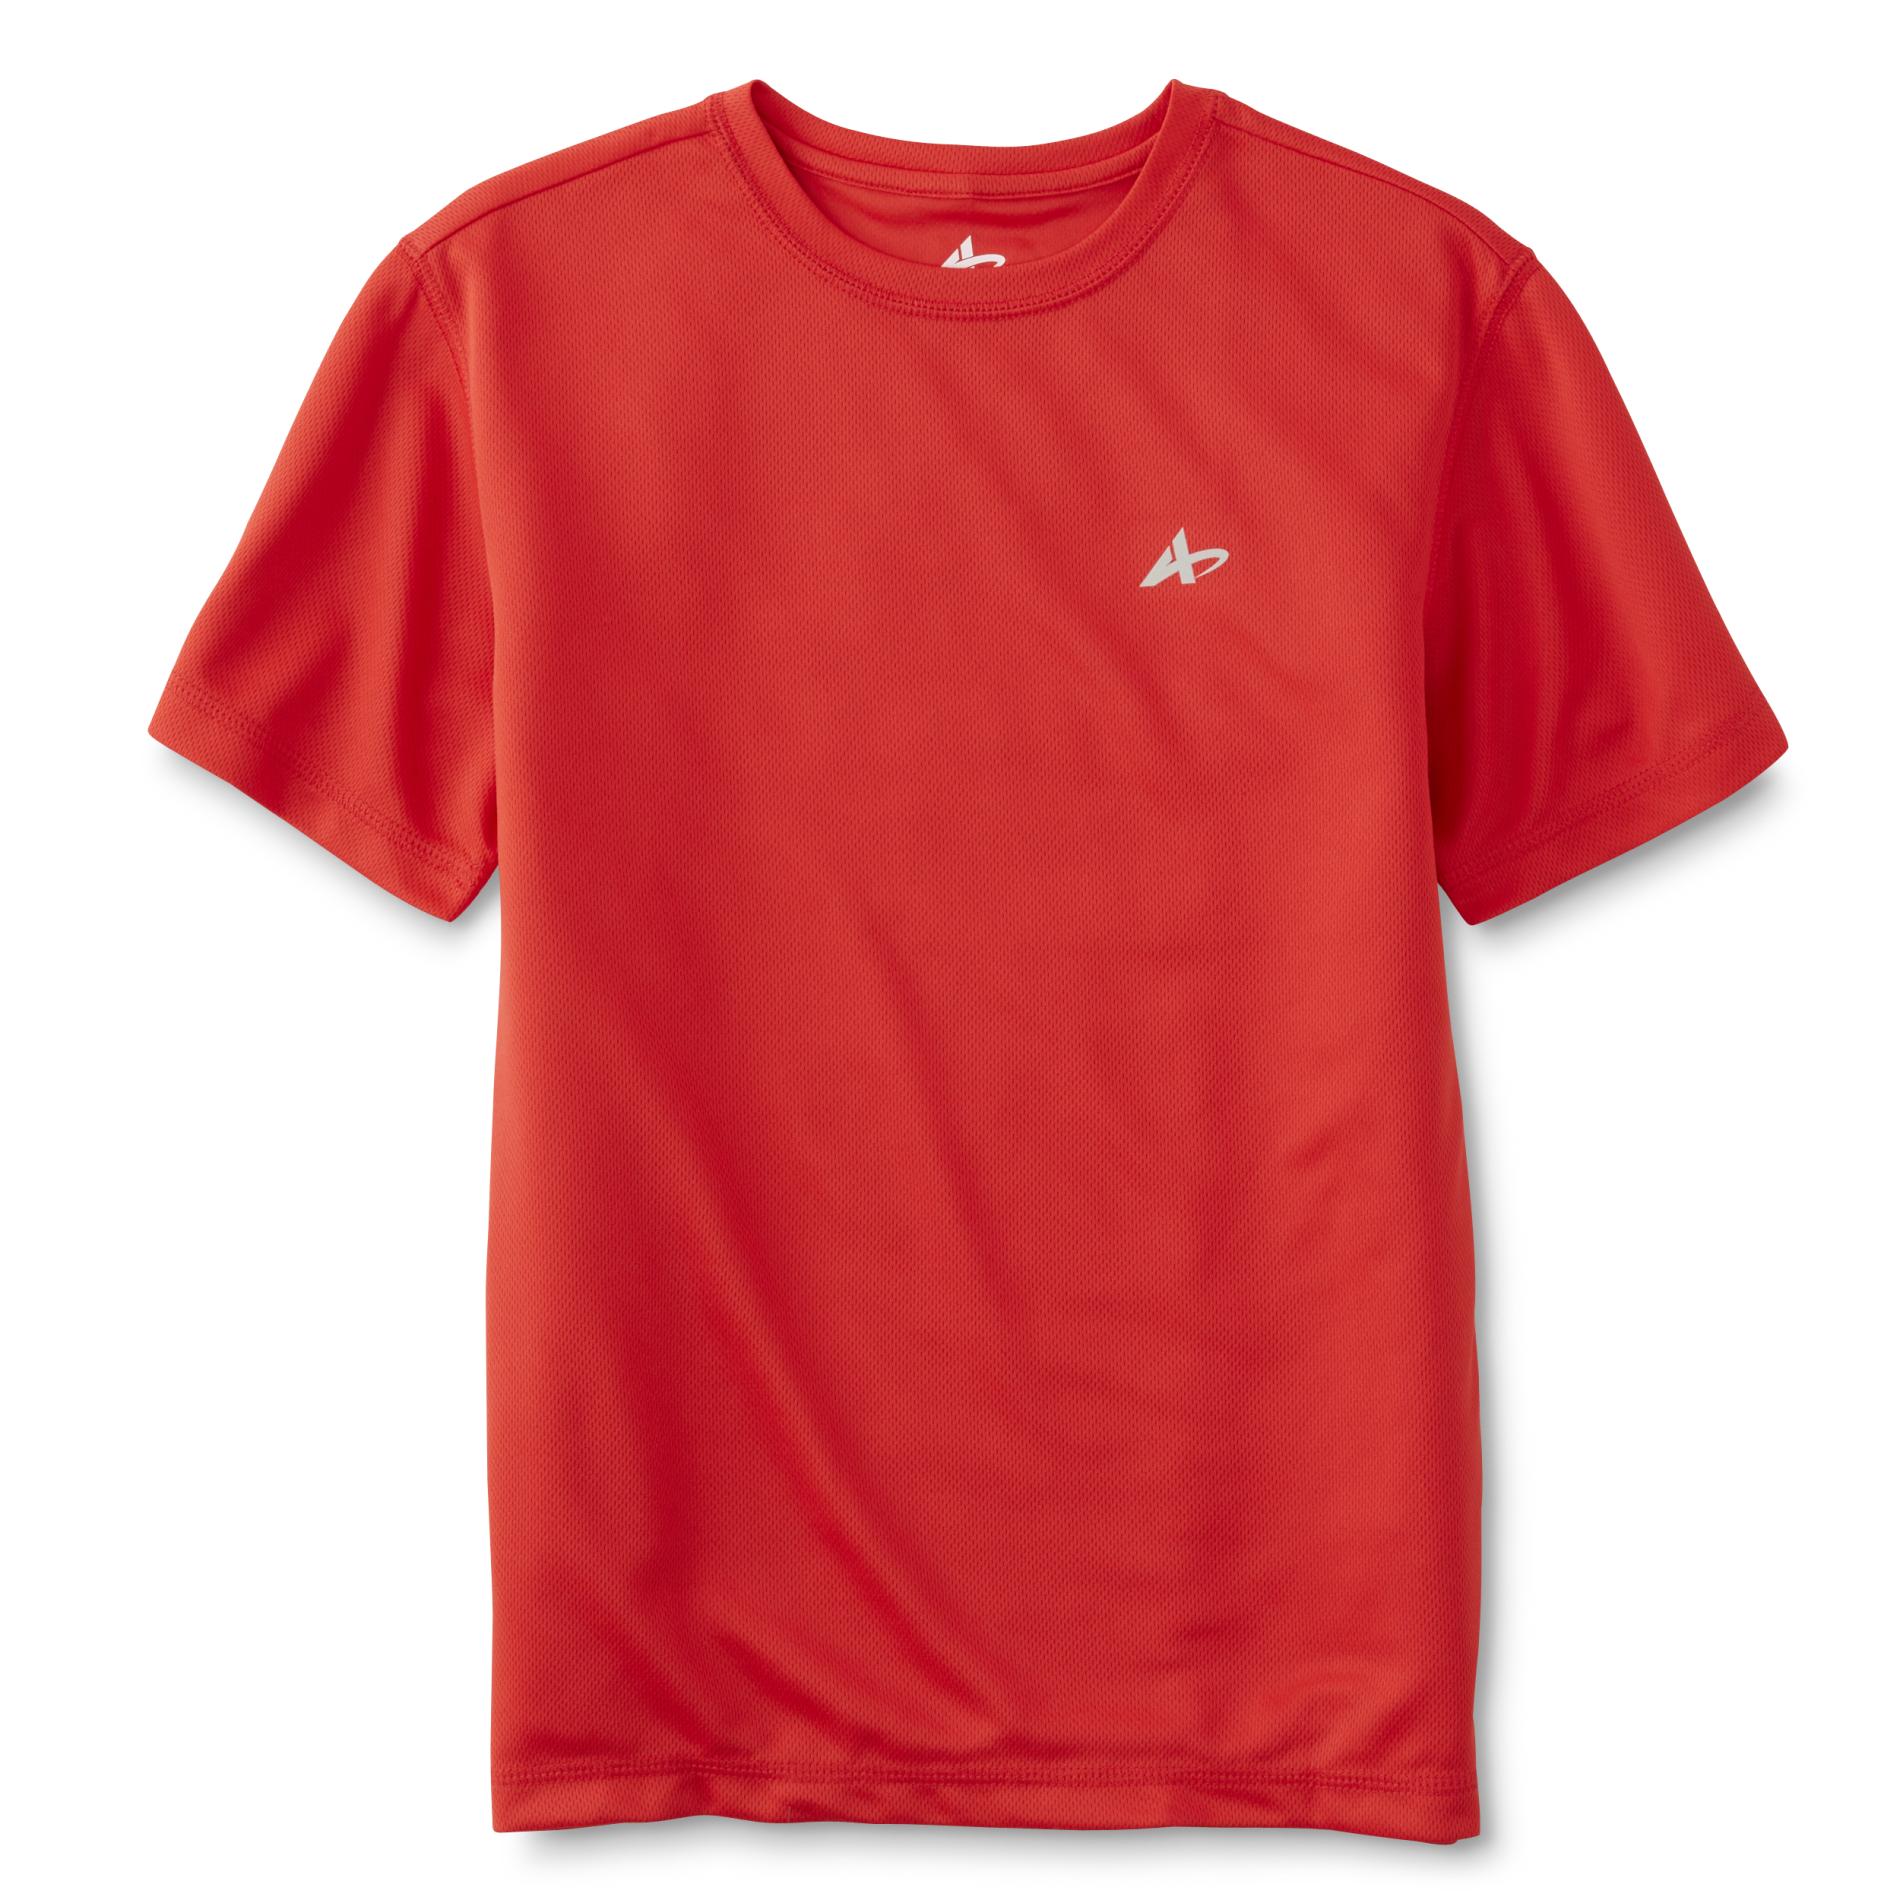 Athletech Boys' Athletic T-Shirt